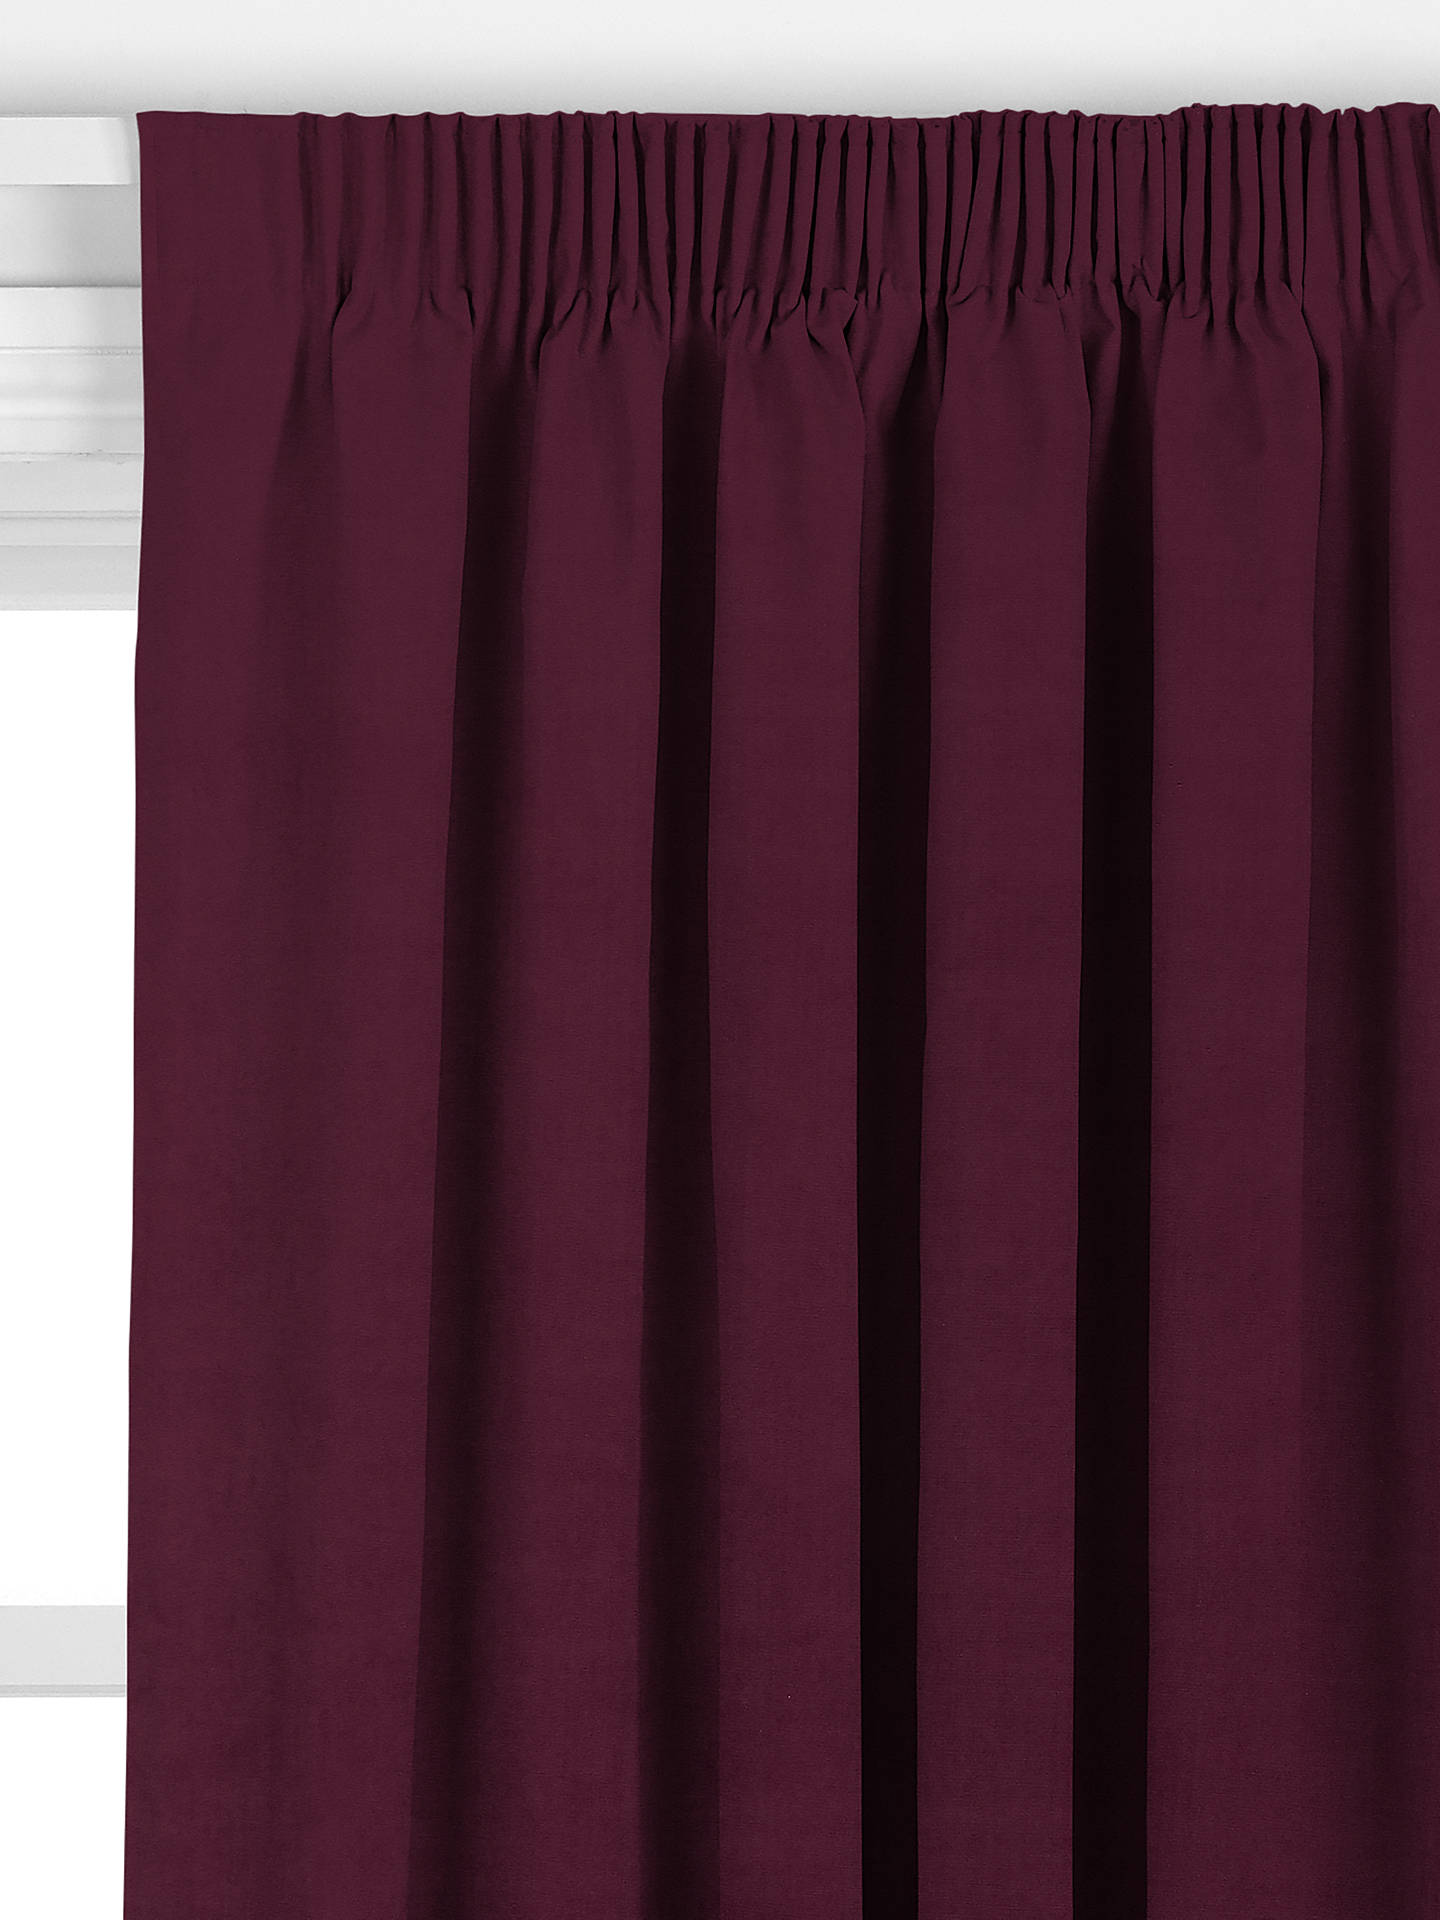 John Lewis Knitted Velvet Made to Measure Curtains, Damson